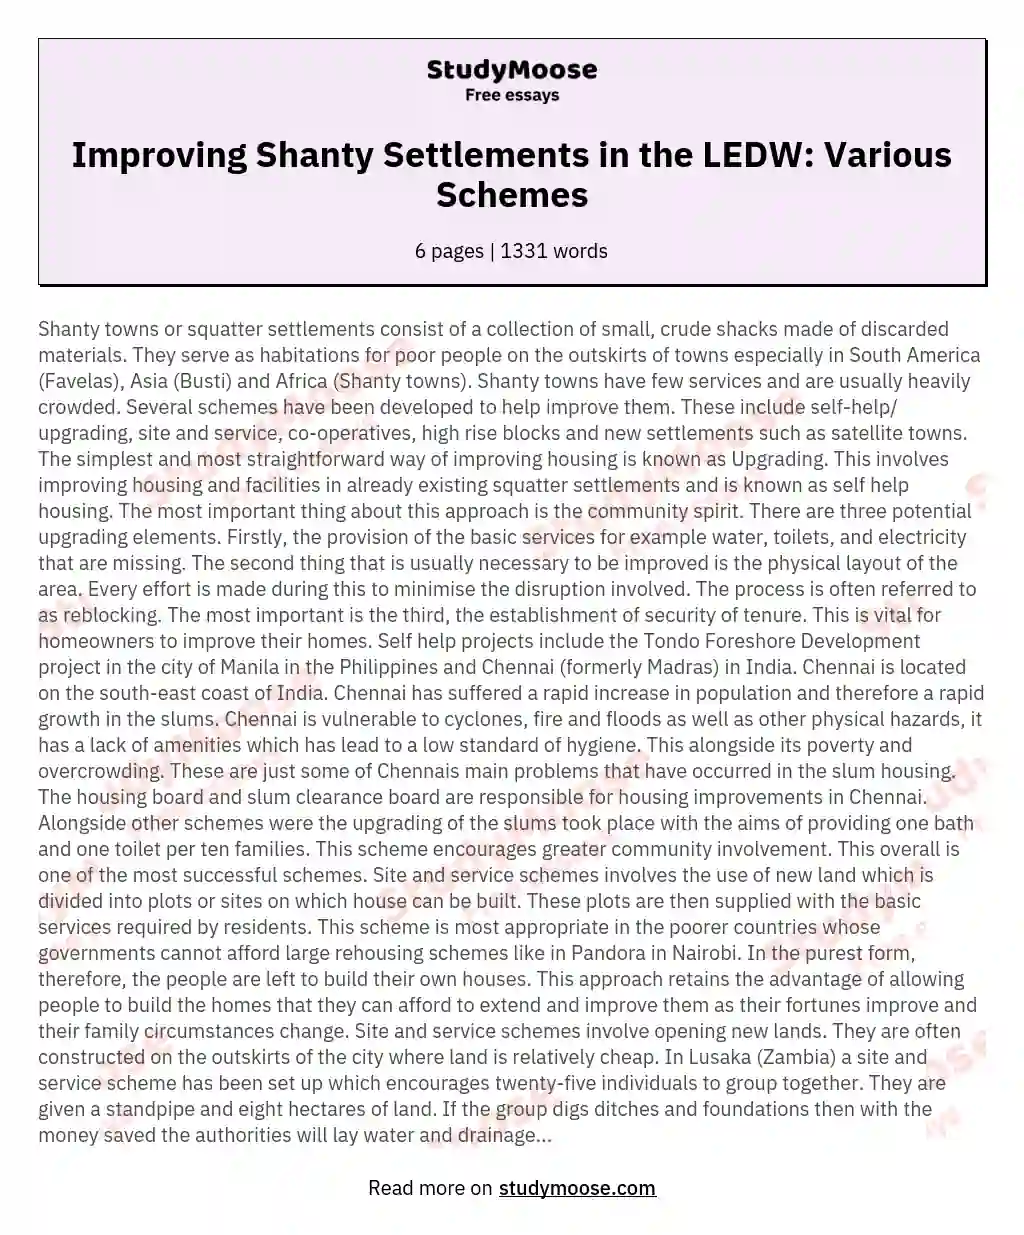 Improving Shanty Settlements in the LEDW: Various Schemes essay